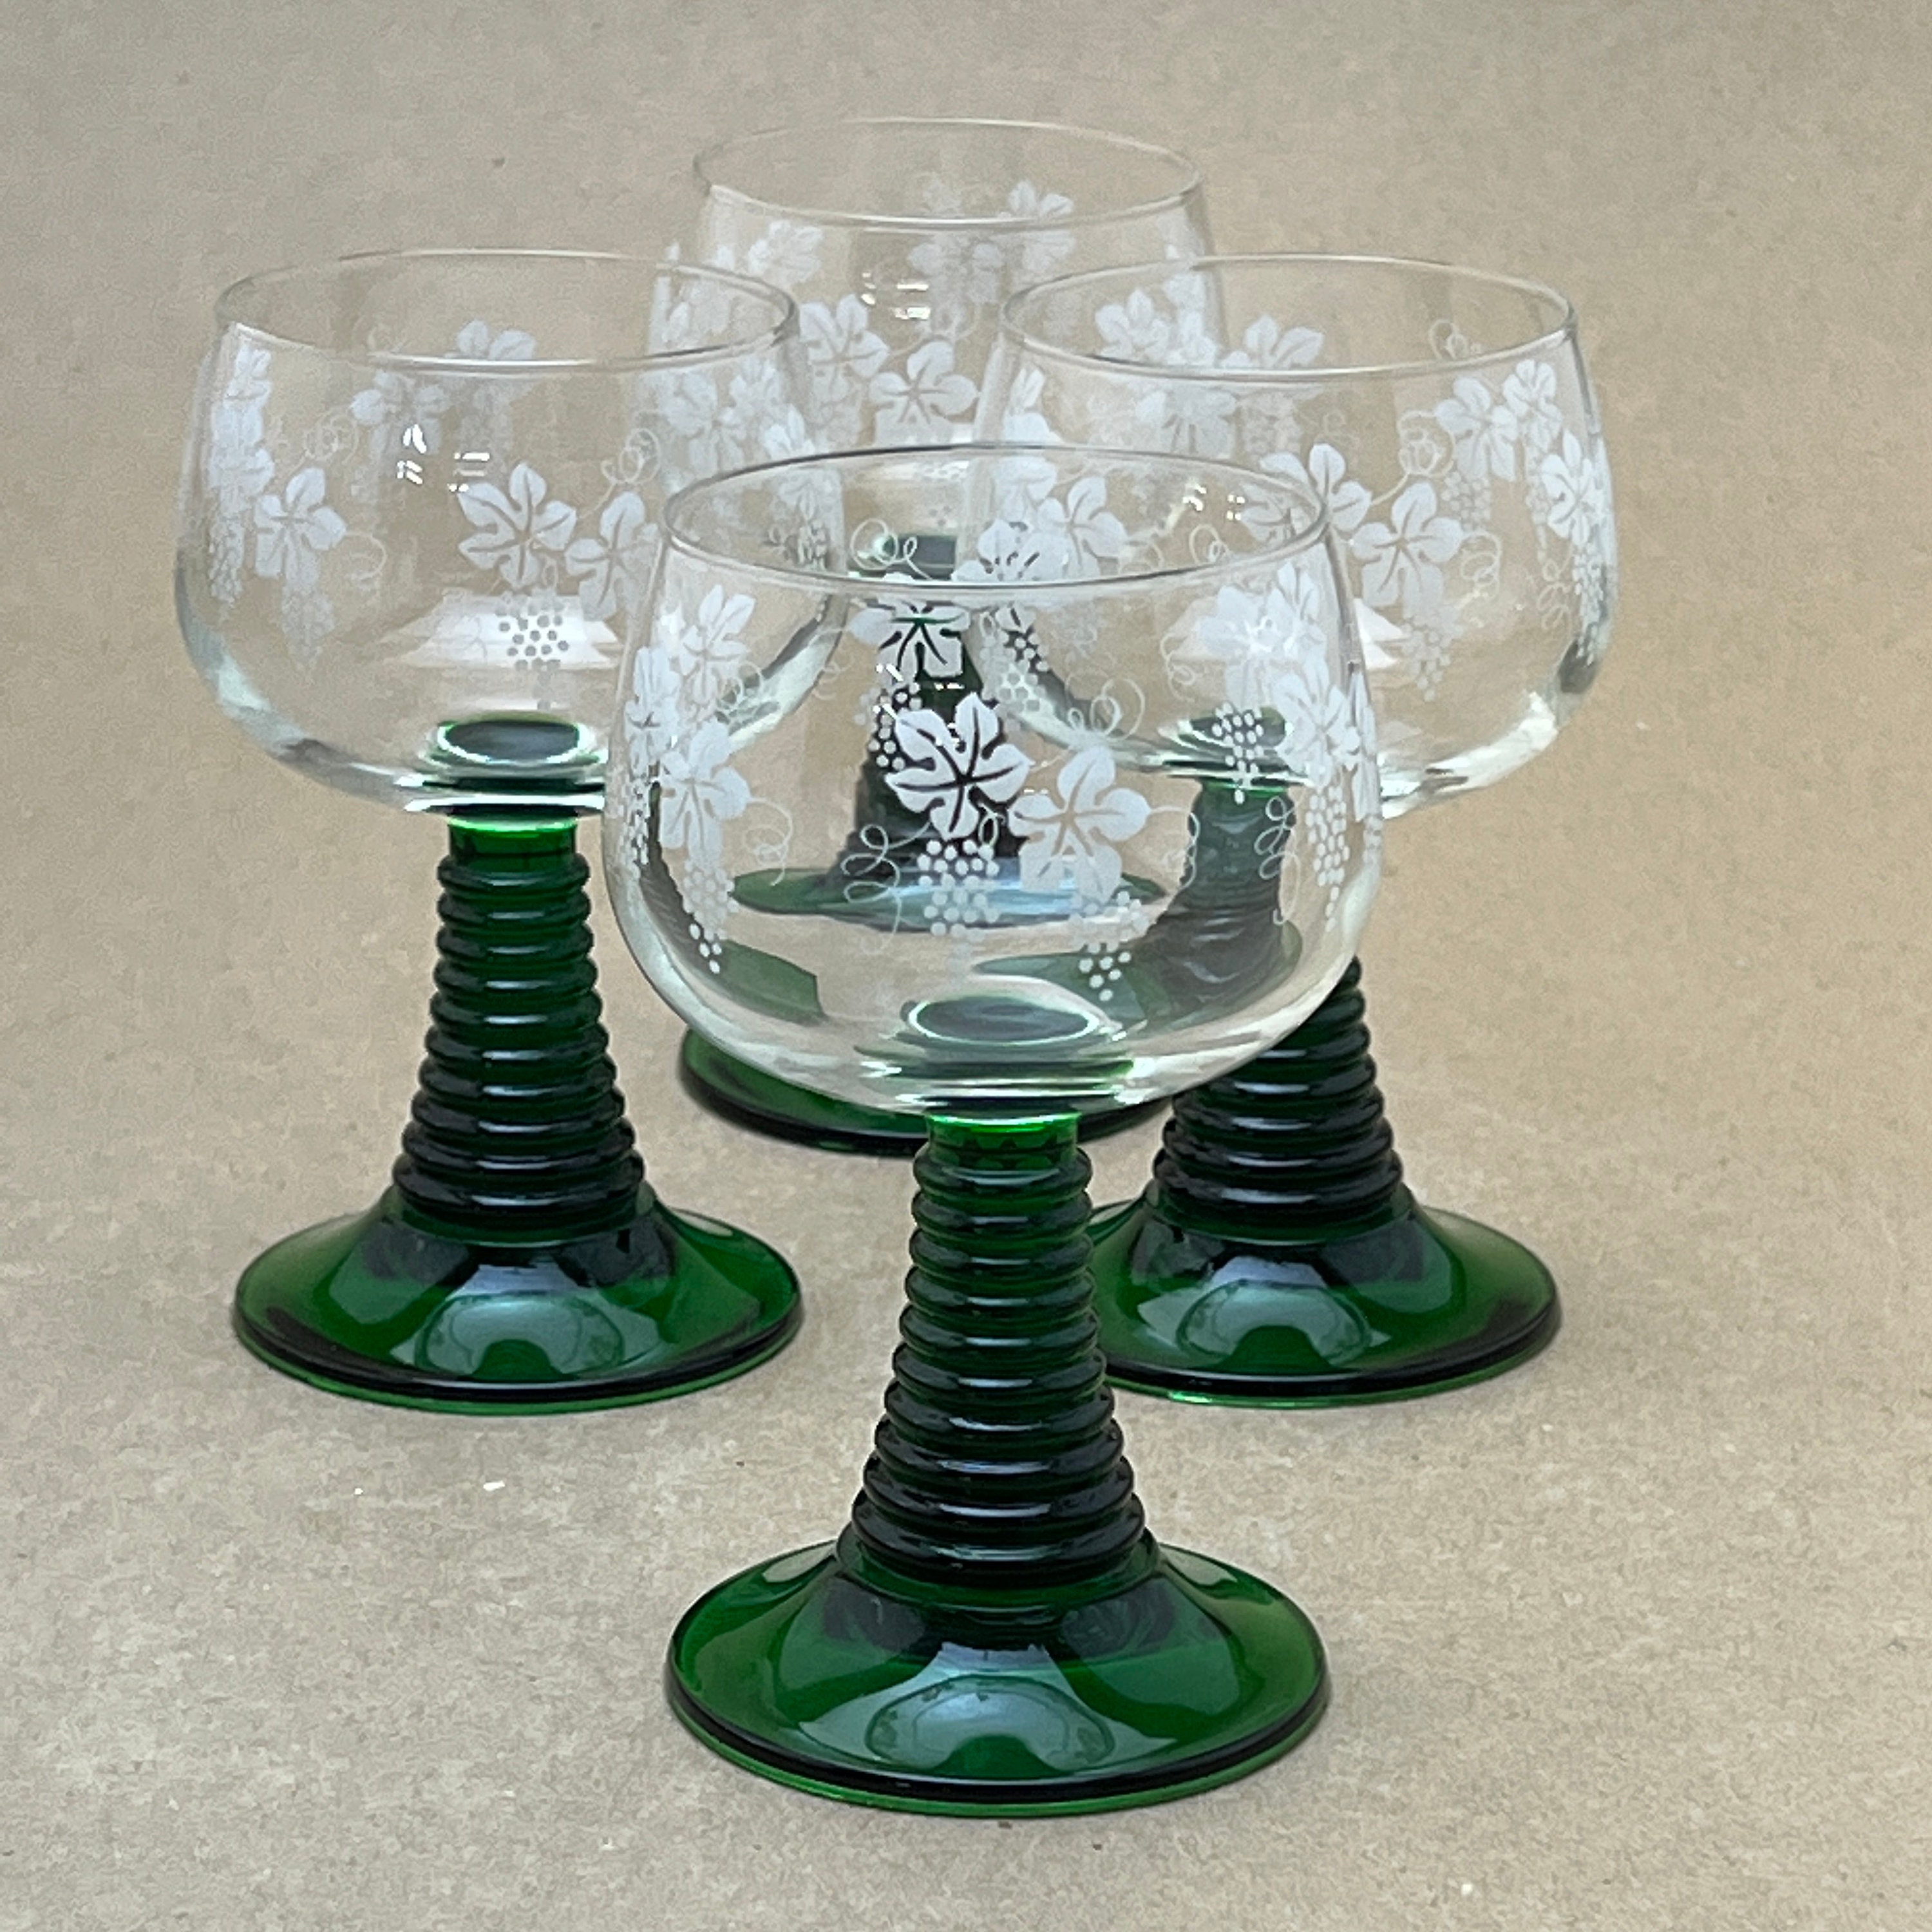 Vintage Alsatian Wine Glasses with Emerald Green Stems - Set of 6 –